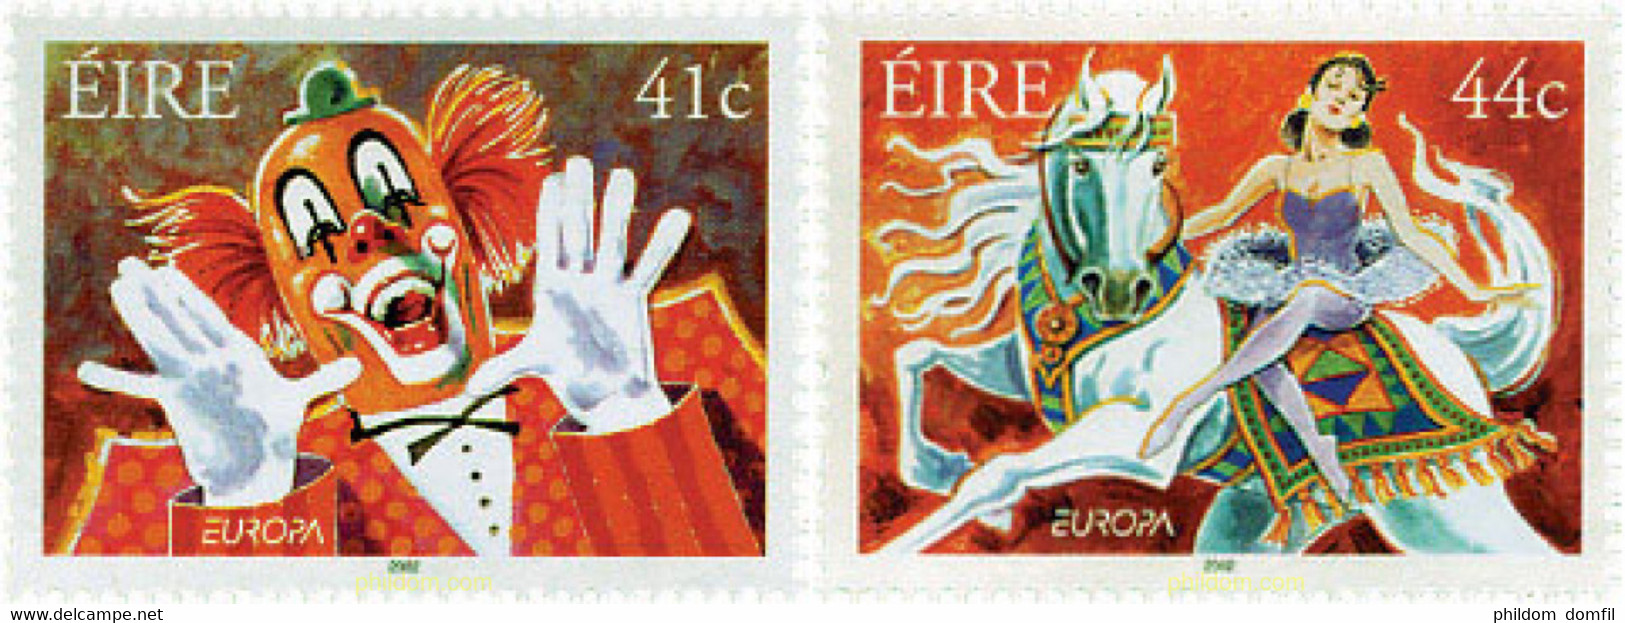 98473 MNH IRLANDA 2002 EUROPA CEPT 2002 - EL CIRCO - Collections, Lots & Series